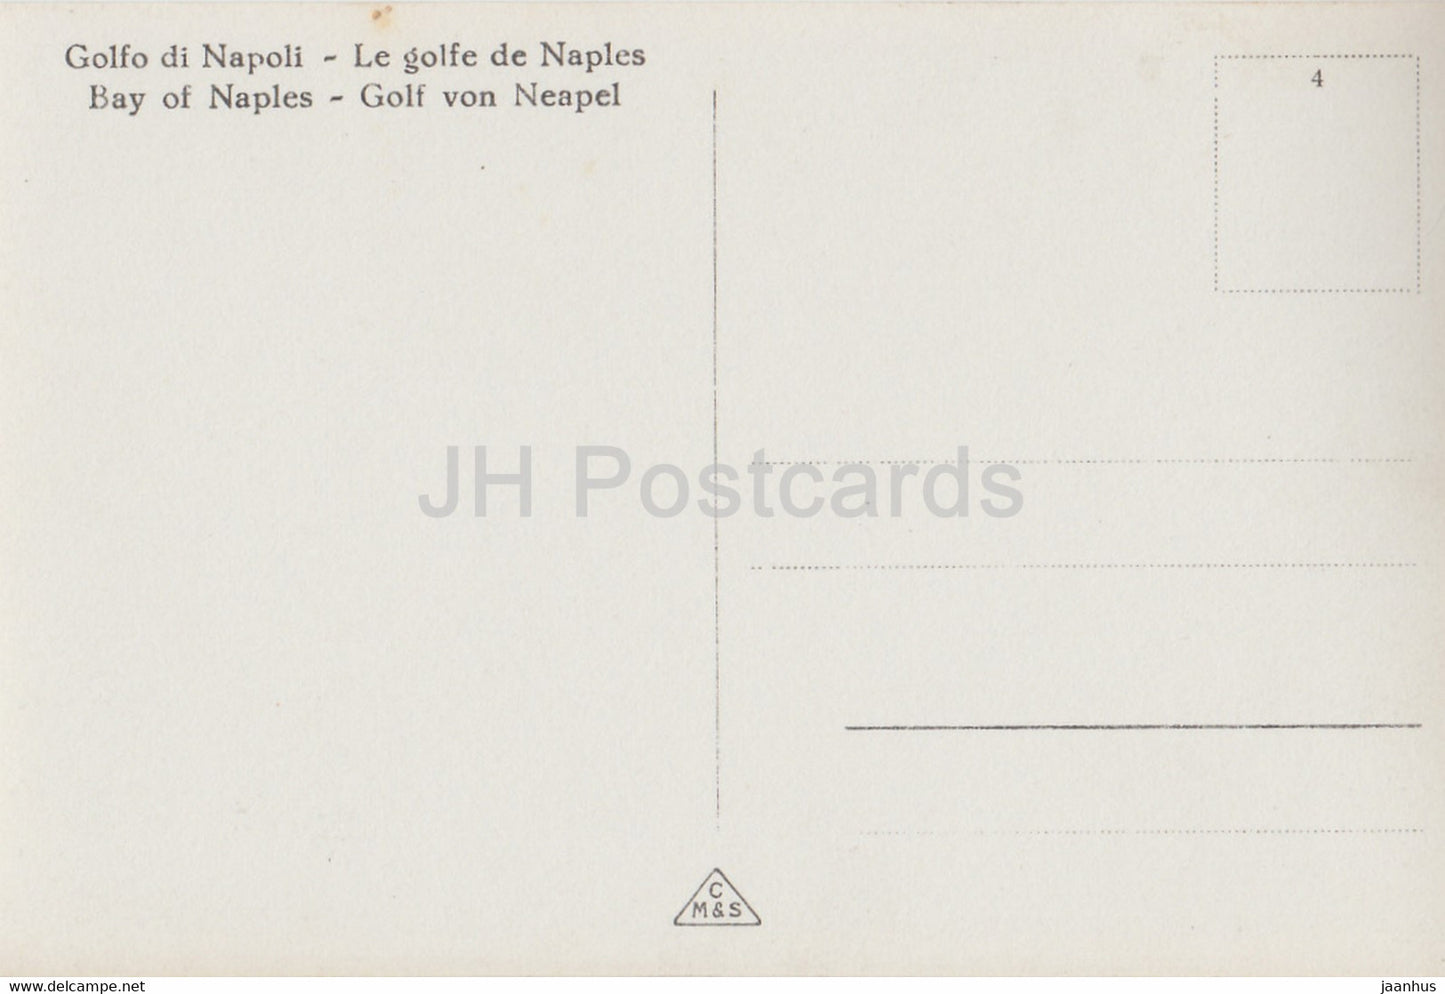 Golfo fi Napoli - Bucht von Neapel - 698 - alte Postkarte - Italien - unbenutzt